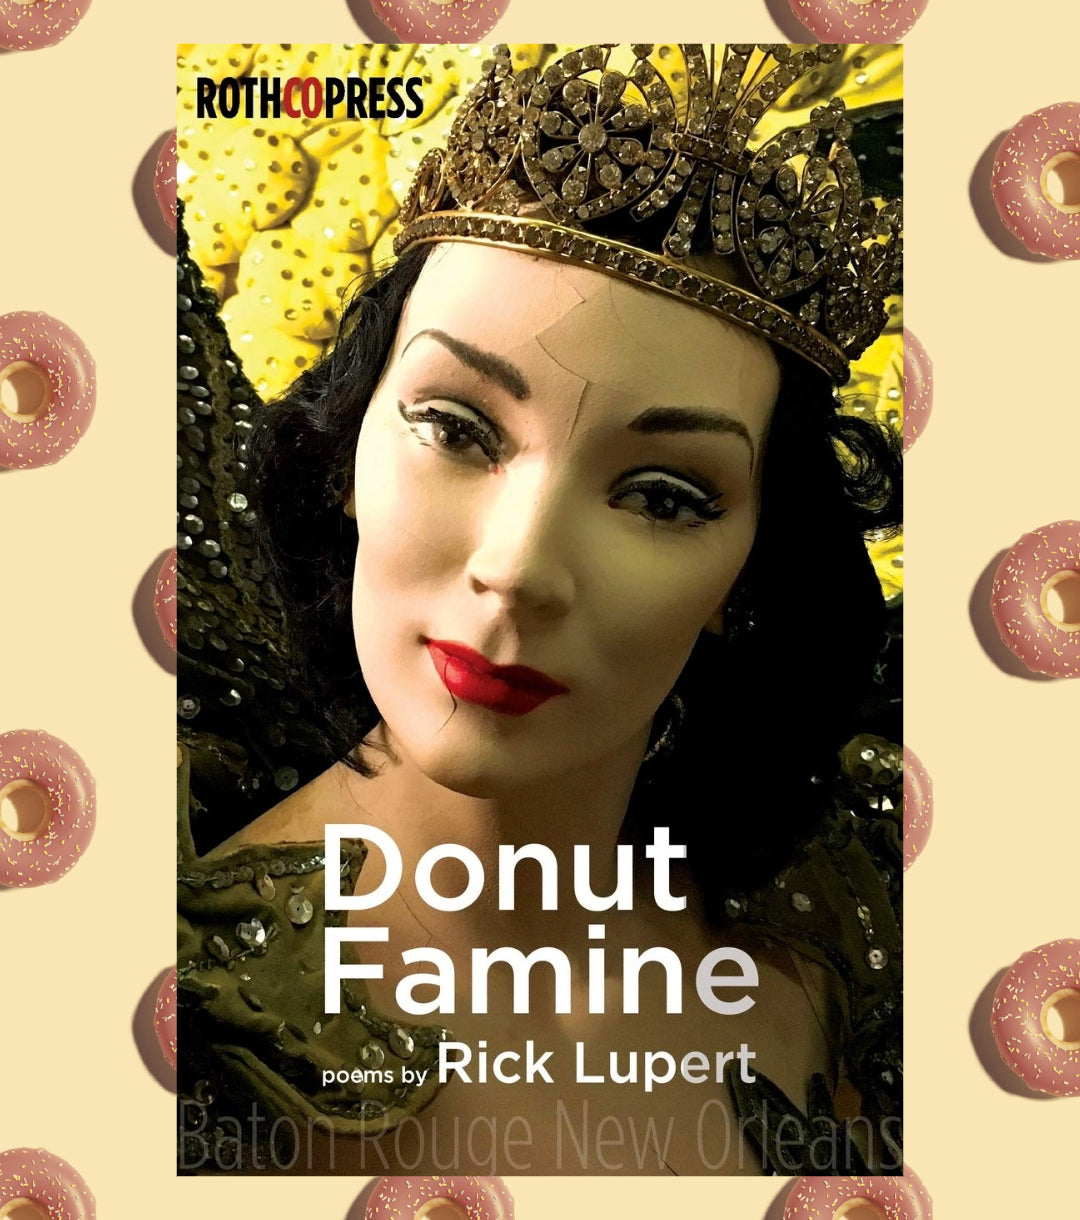 Donut Famine by Rick Lupurt